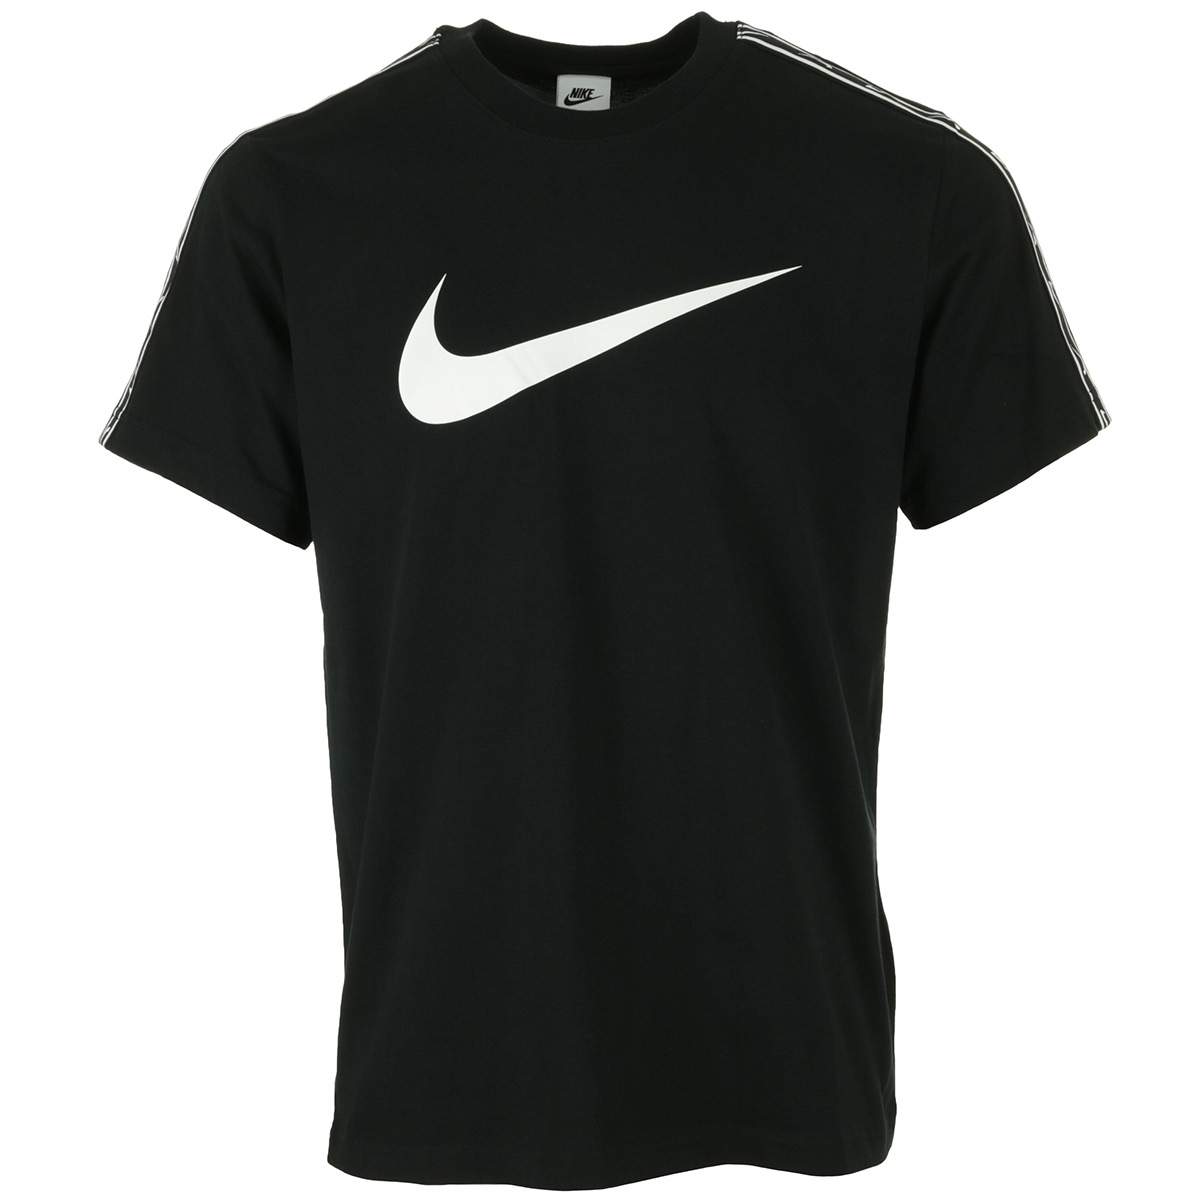 Nike Repeat Swoosh Tee shirt